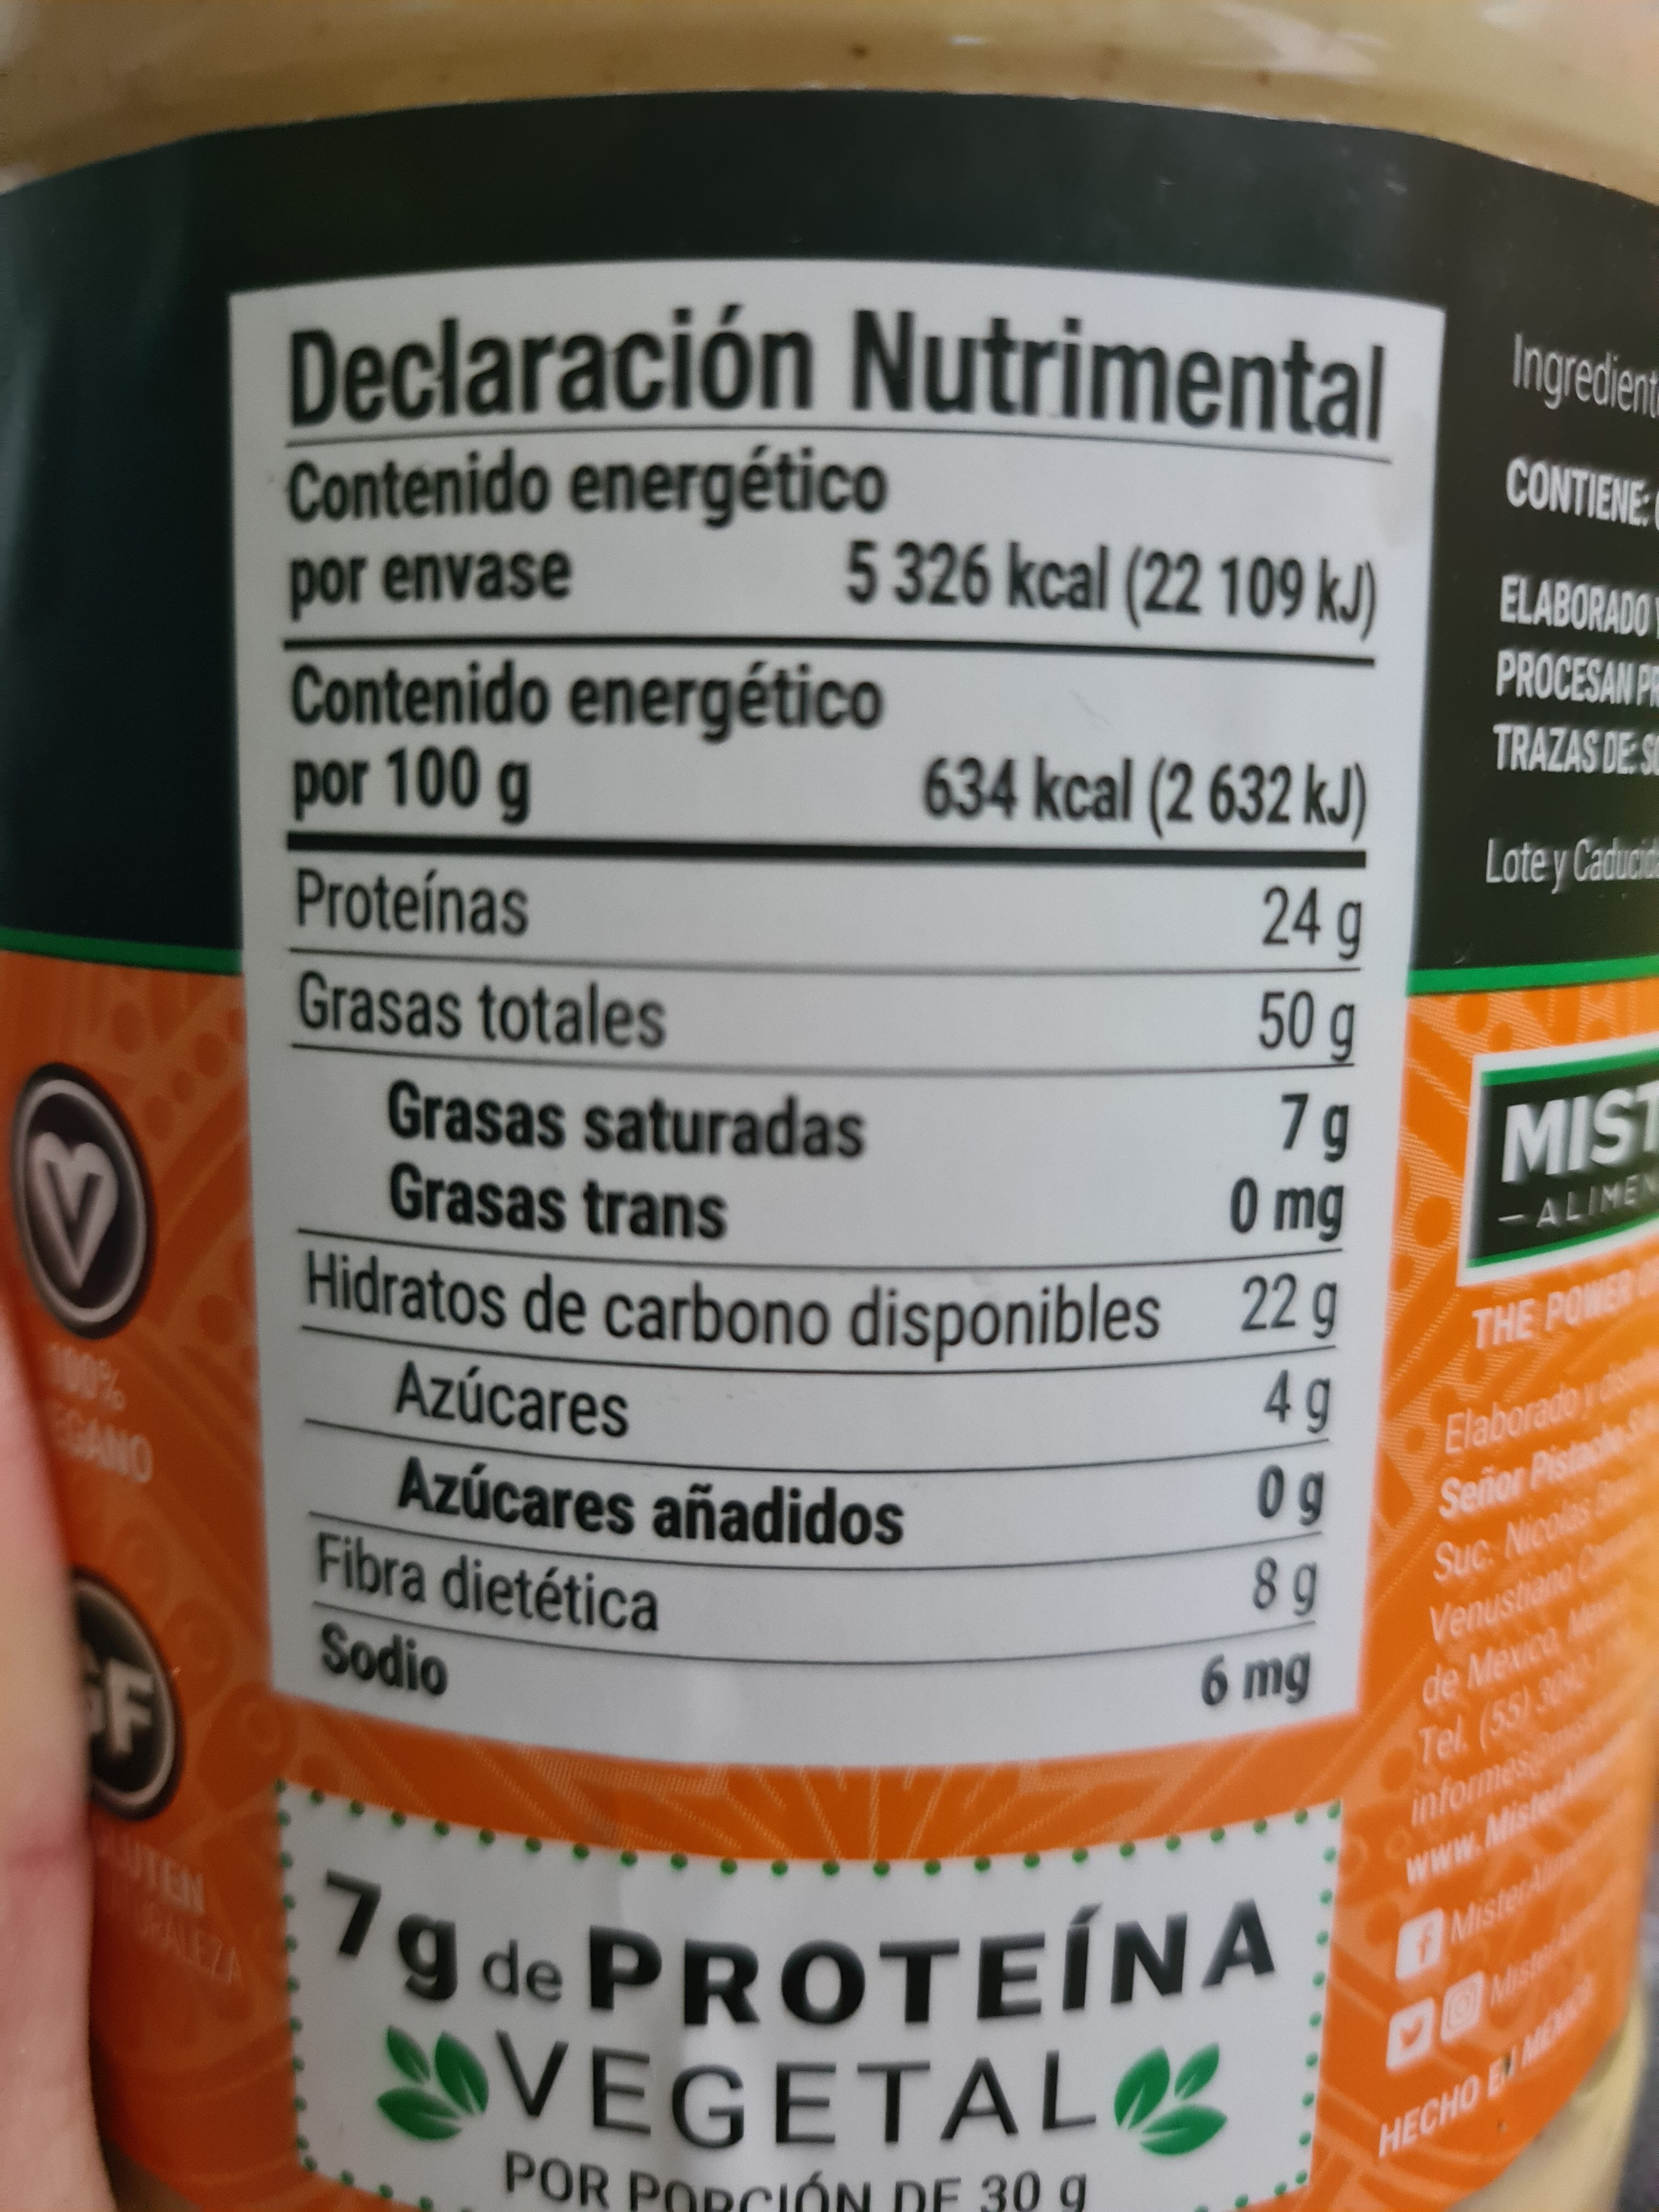 Mister natural untable de cacahuate - Nutrition facts - es